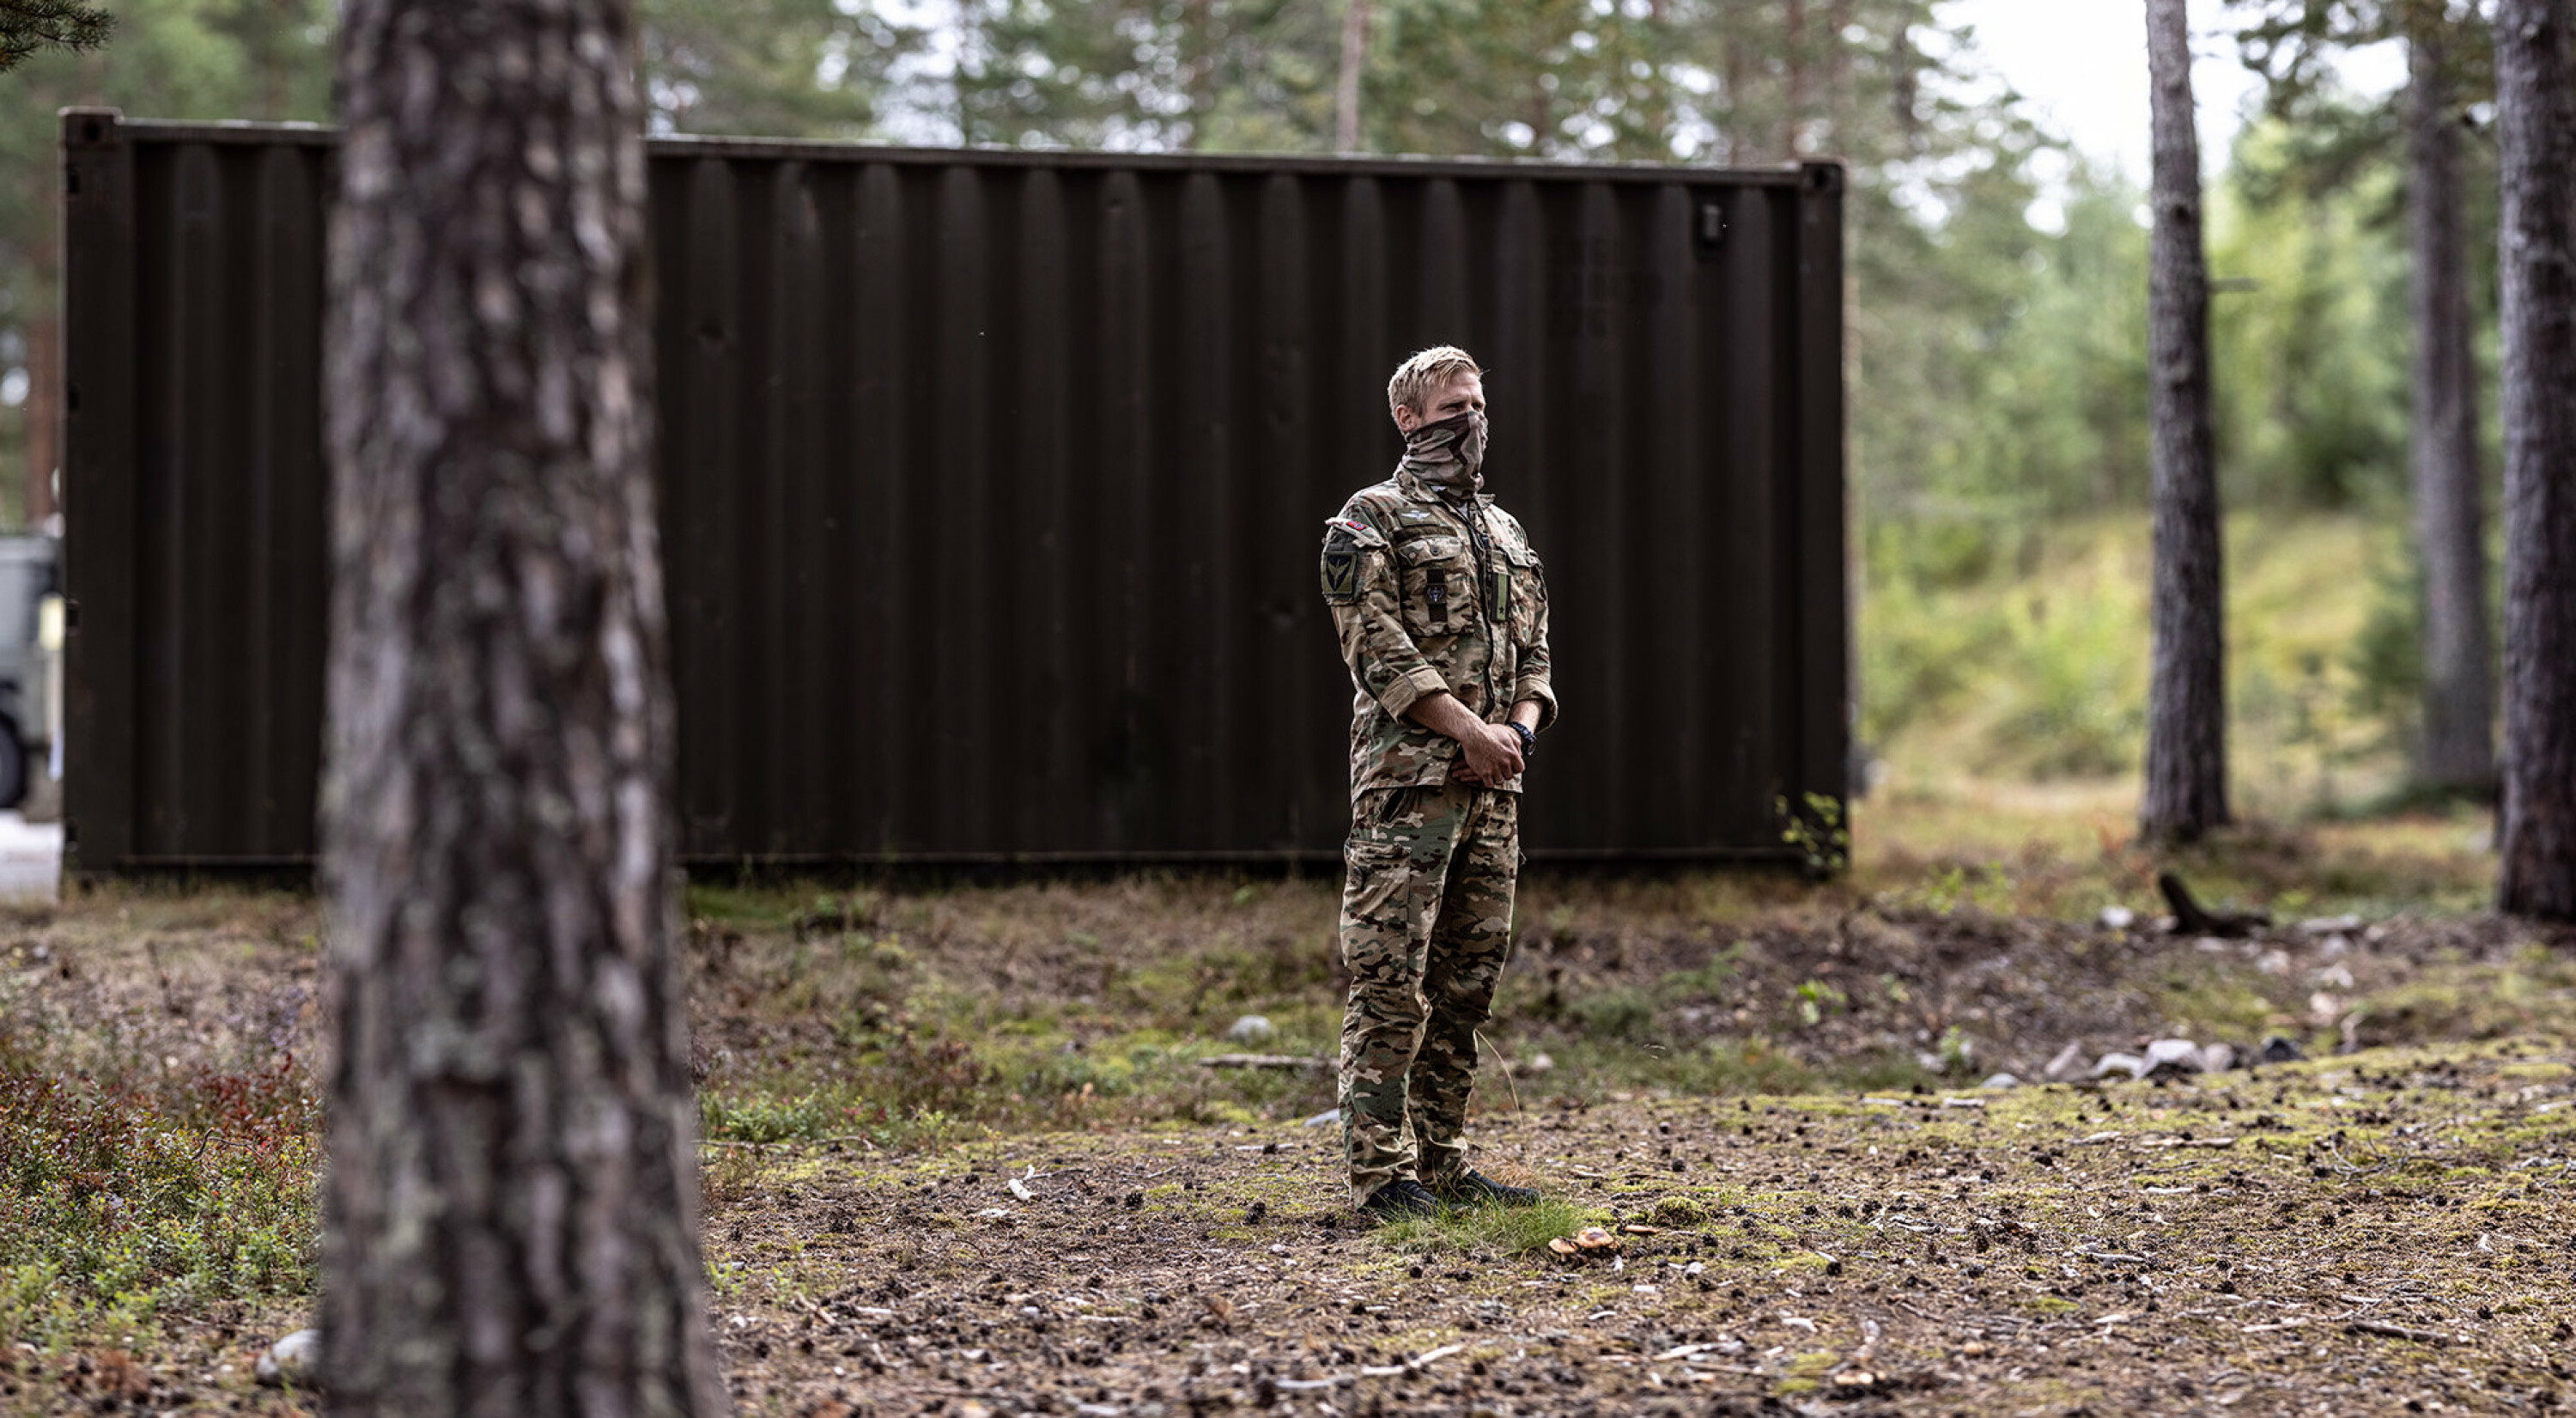 «Eldar» i Forsvarets spesialkommando var den siste norske sjefen i Afghanistan. Han dro hjem i juni 2021.